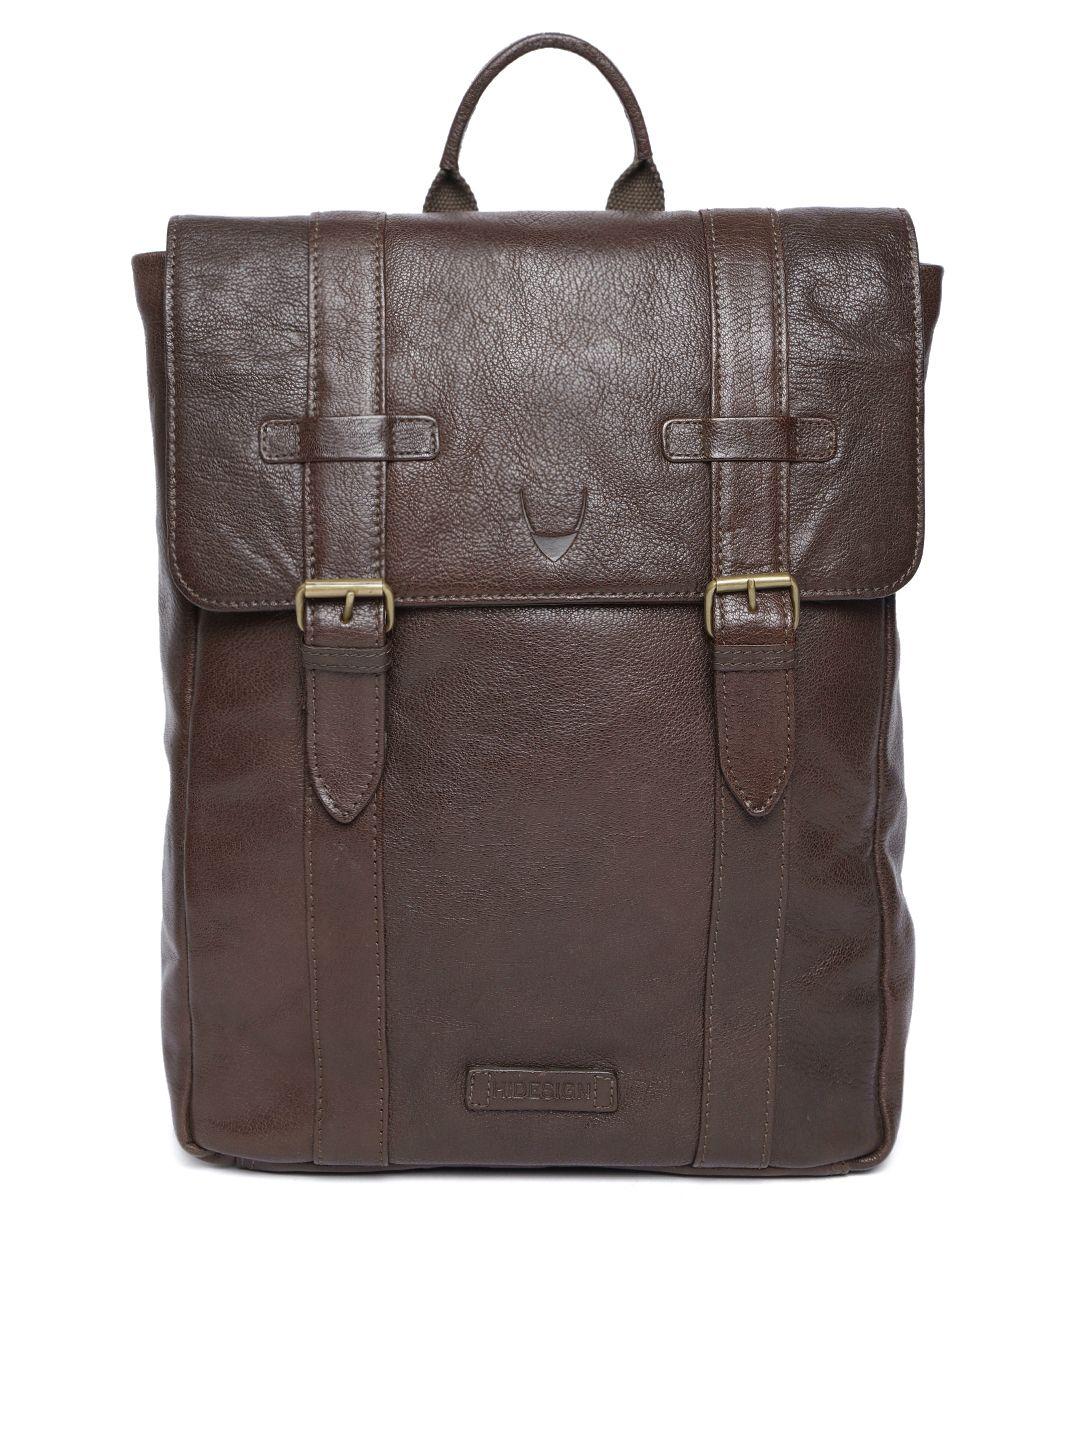 hidesign men coffee brown solid leather backpack